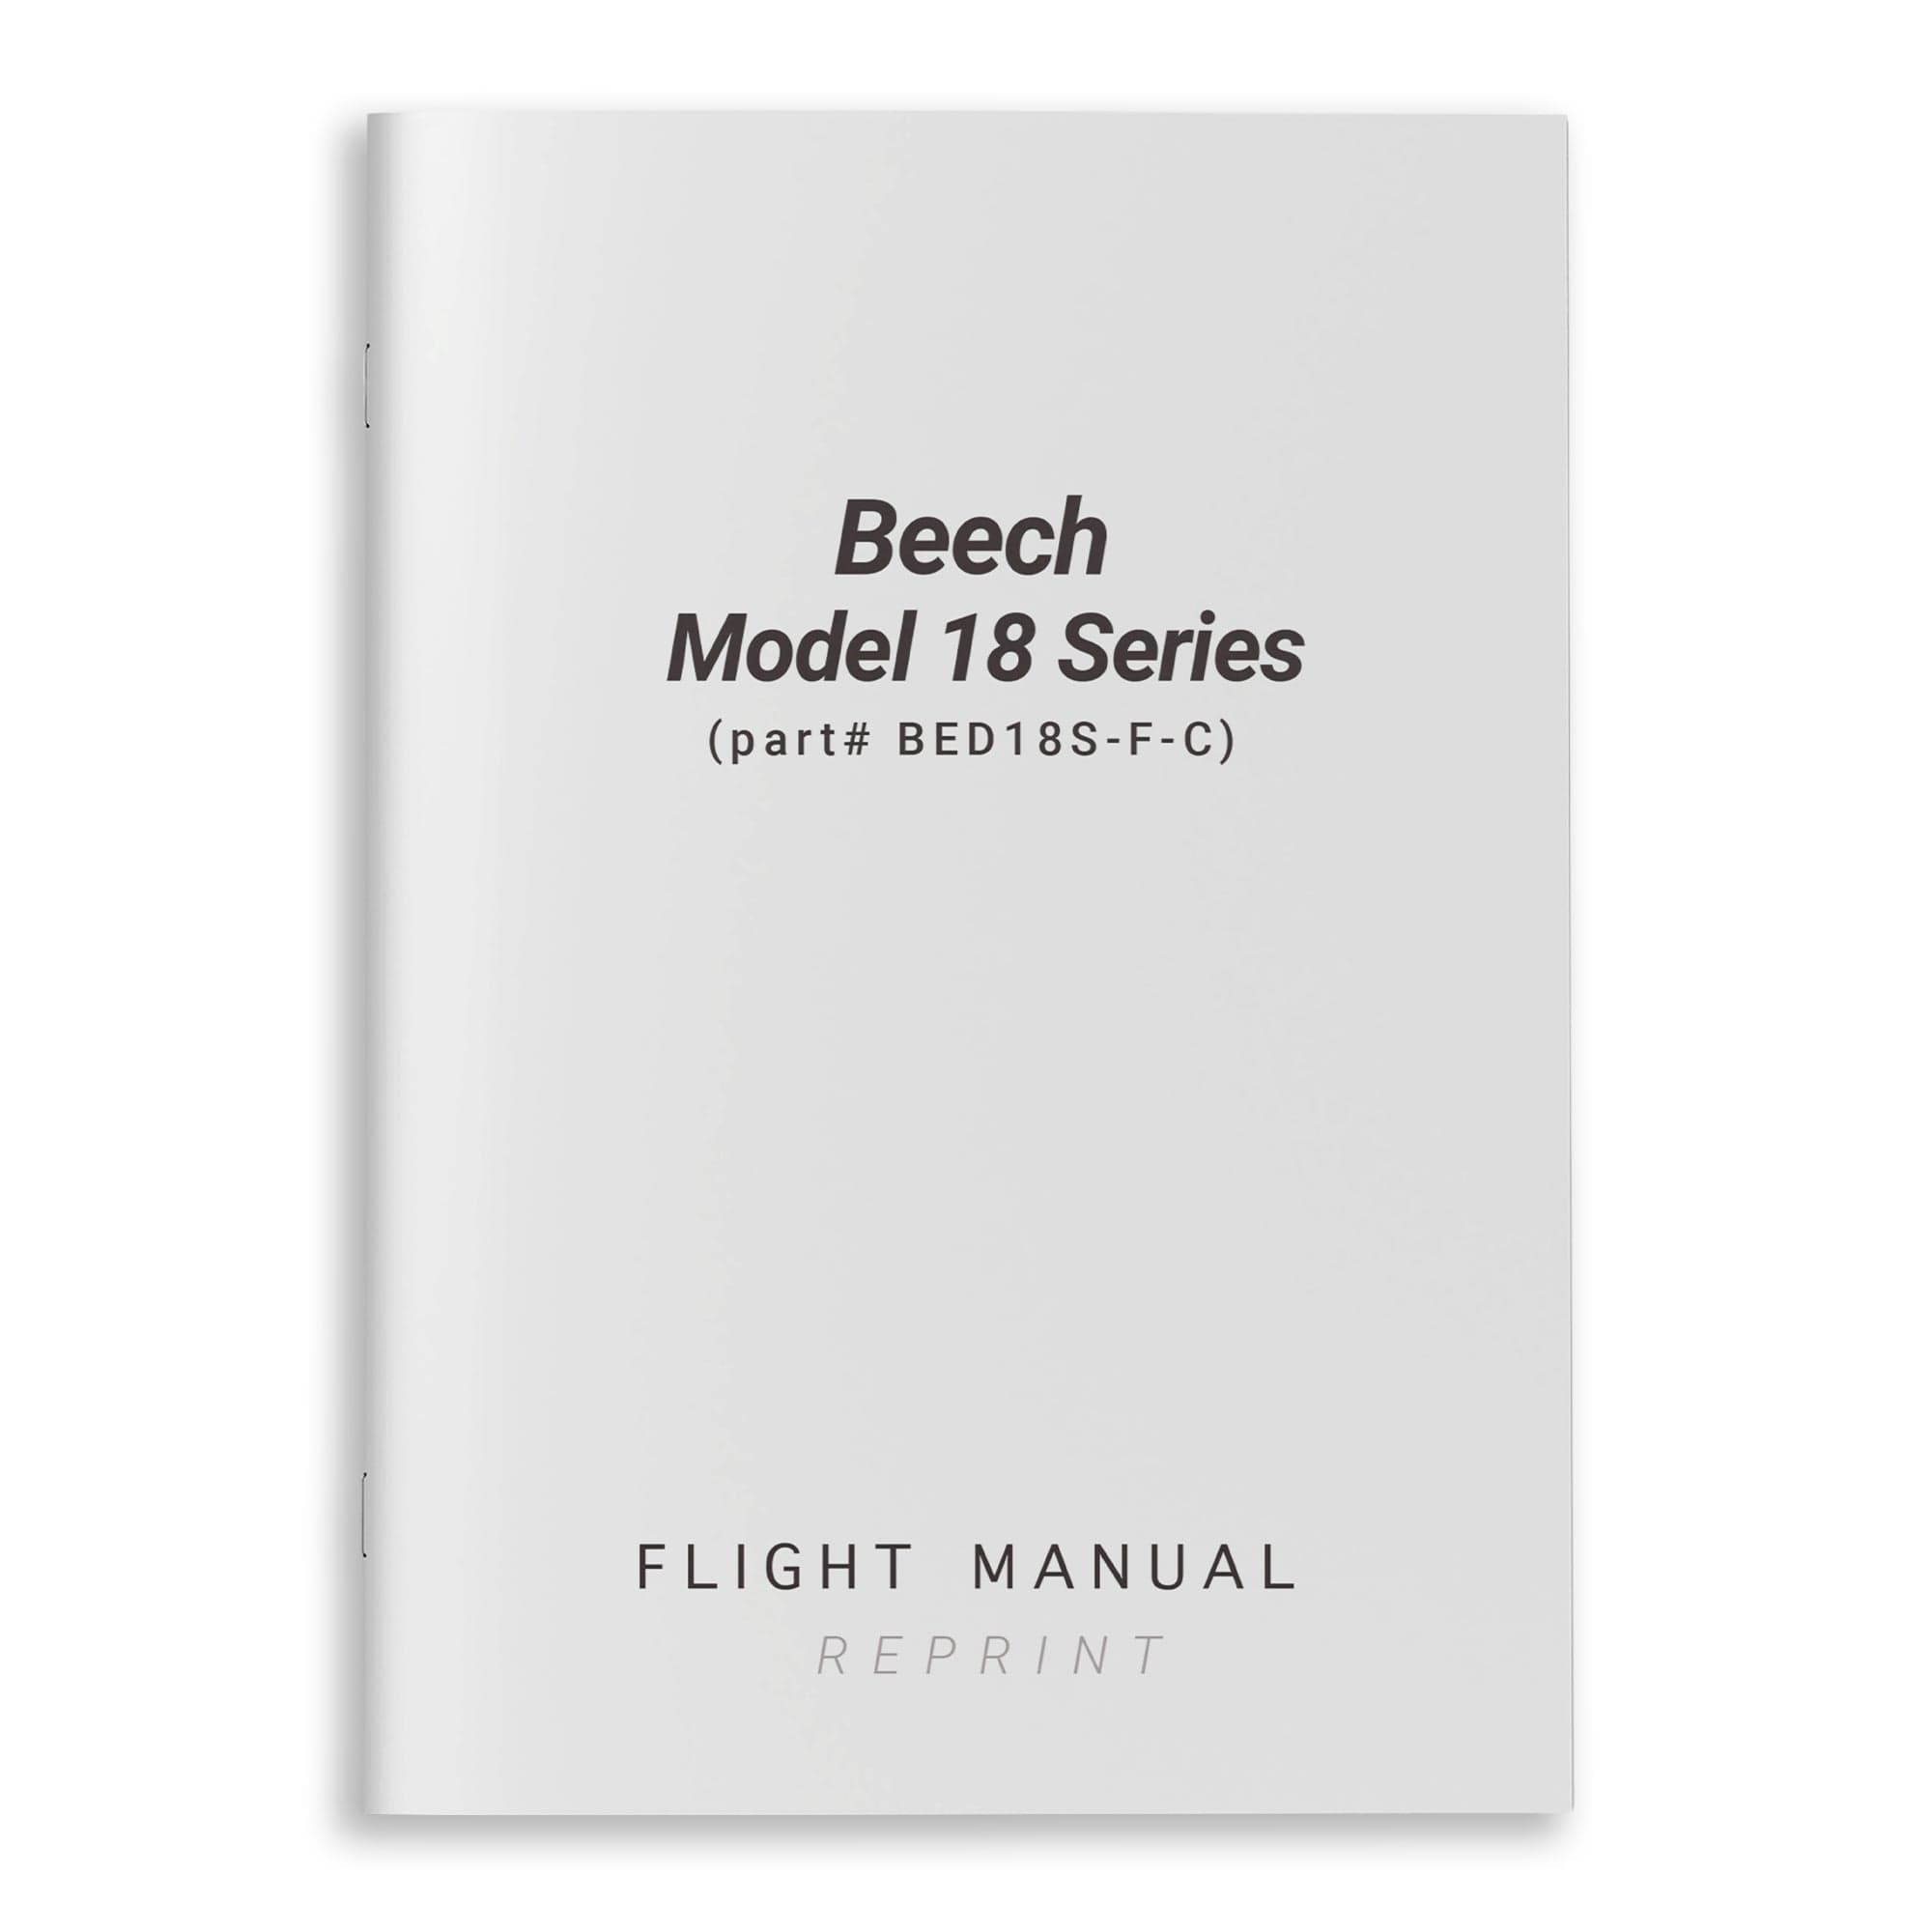 Beech Model 18 Series Flight Manual (part# BED18S-F-C)